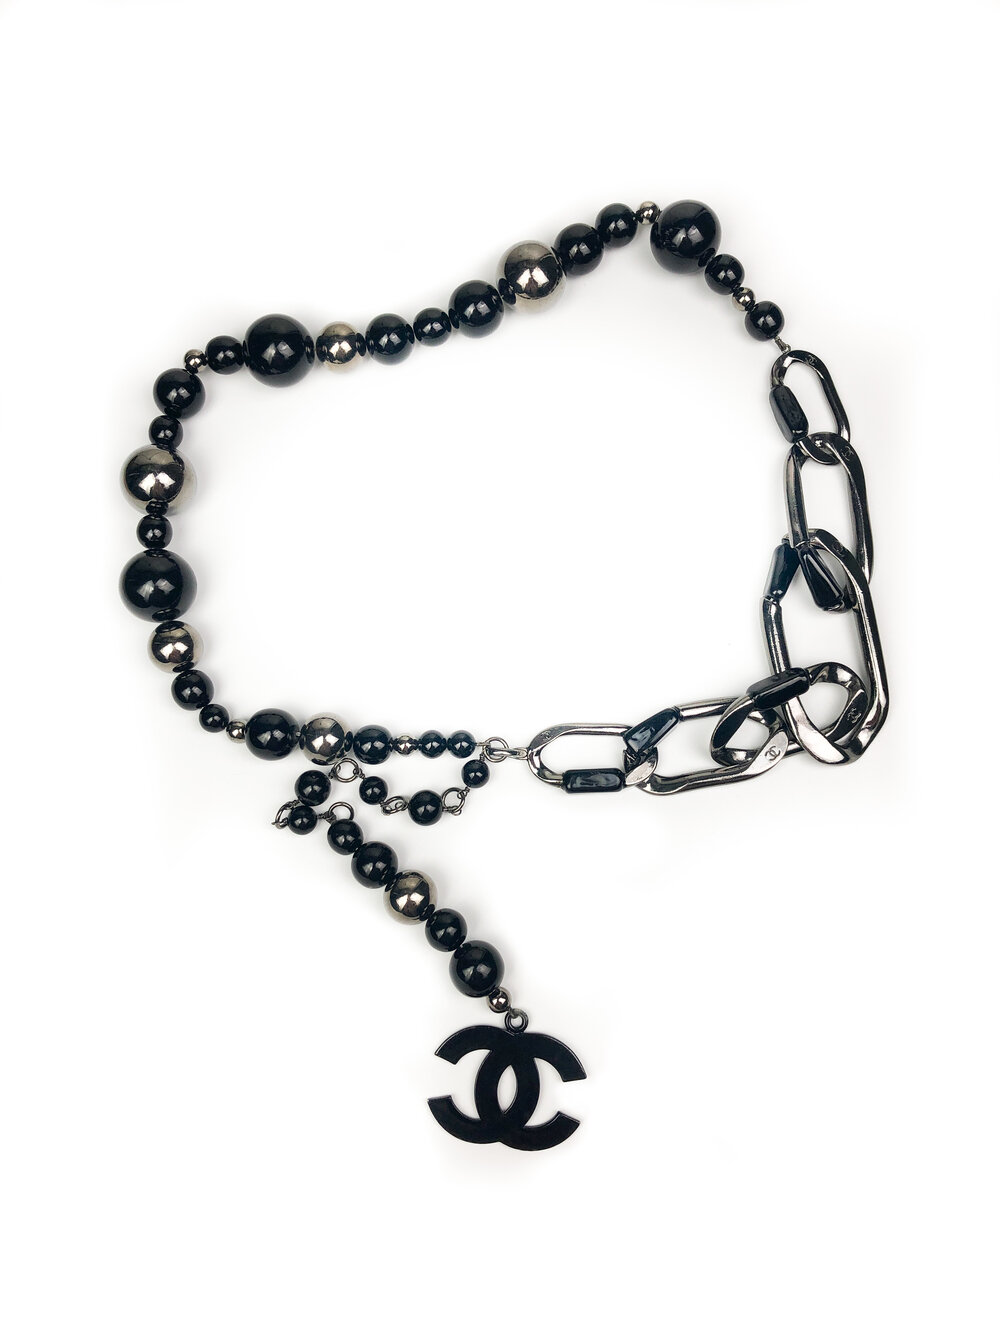 Chanel letters chain belt, Barang Mewah, Aksesoris di Carousell